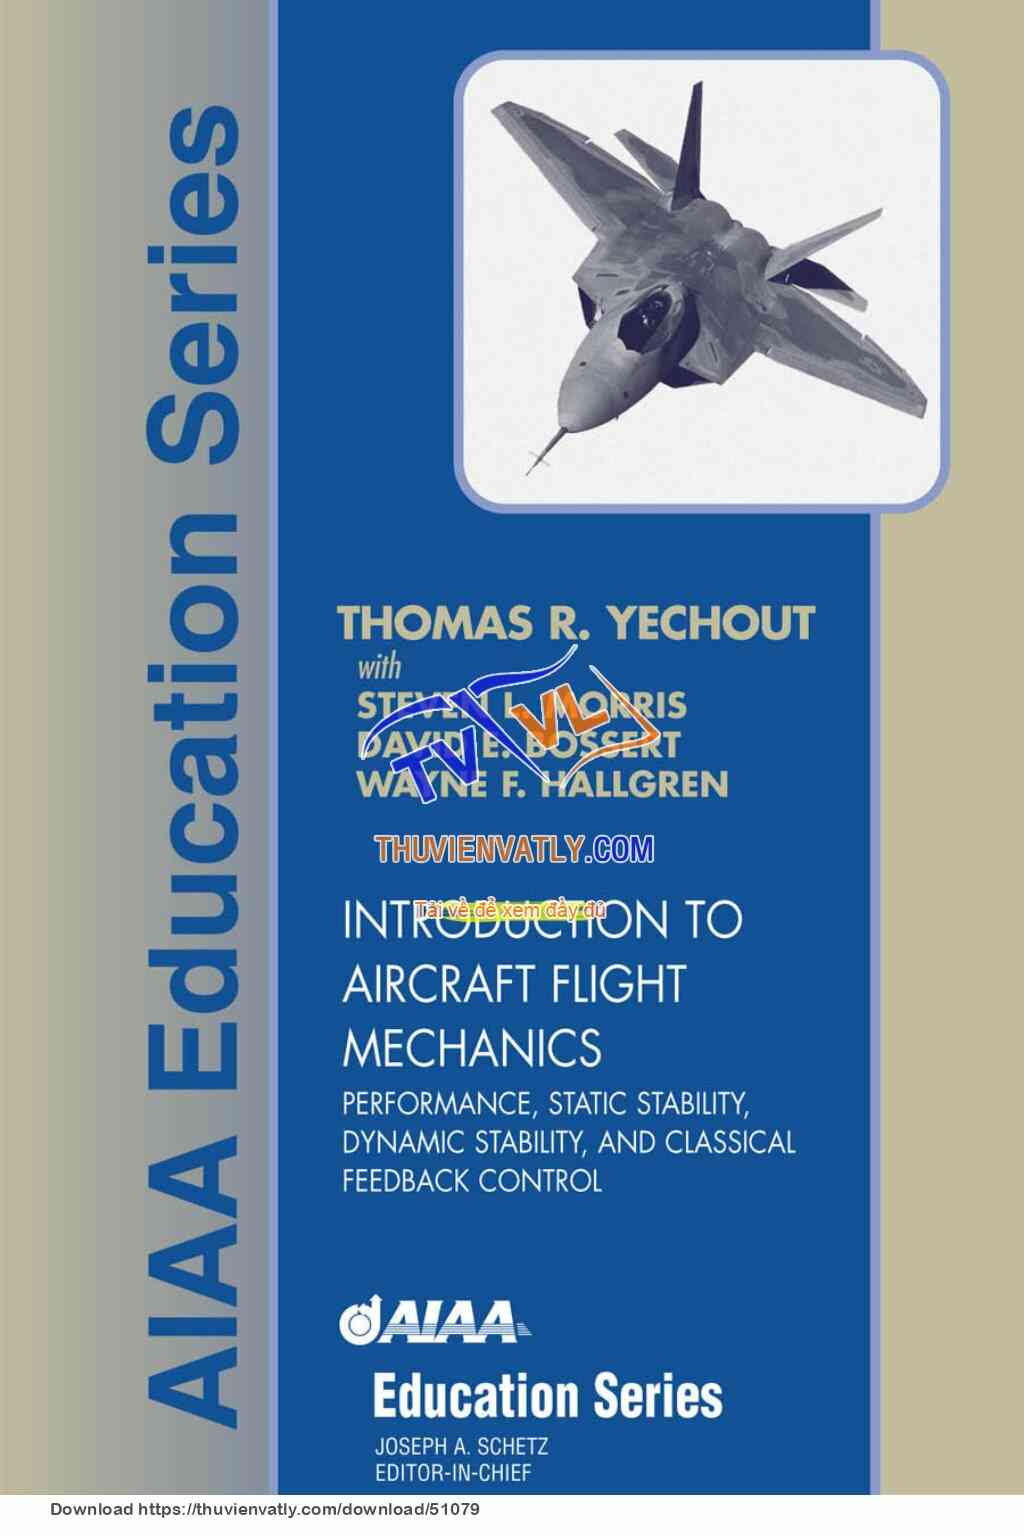 Introduction to aircraft flight mechanics